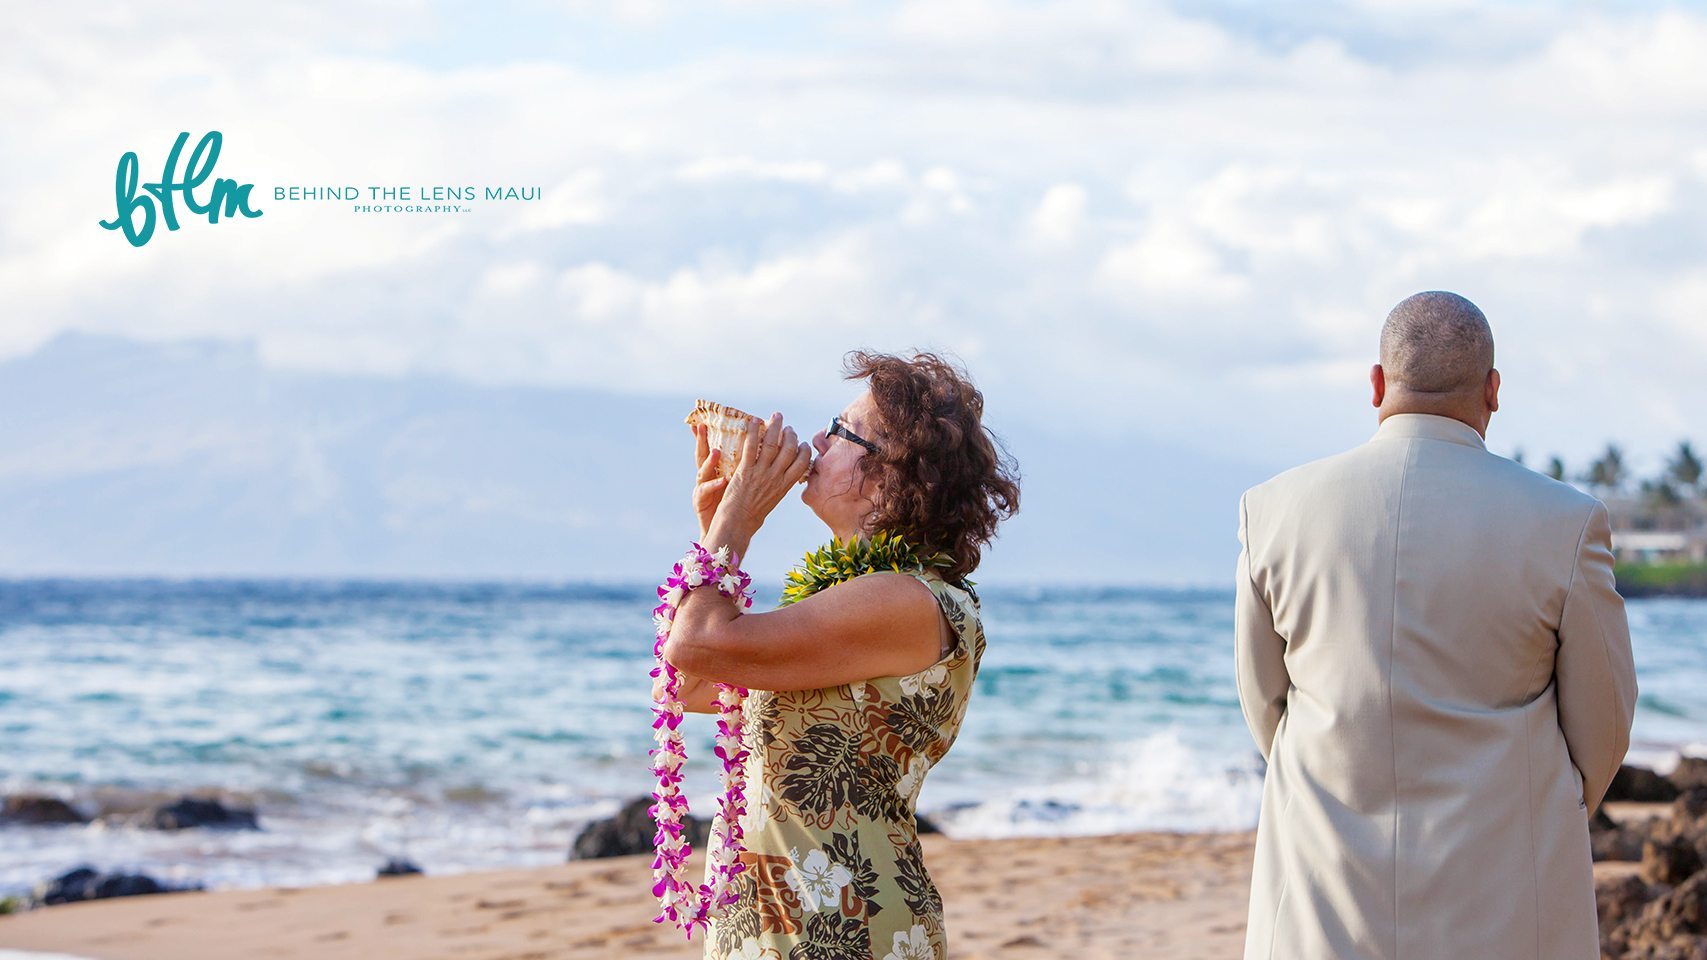 Maui Wedding Photographers 6 _Behind The Lens Maui.jpg